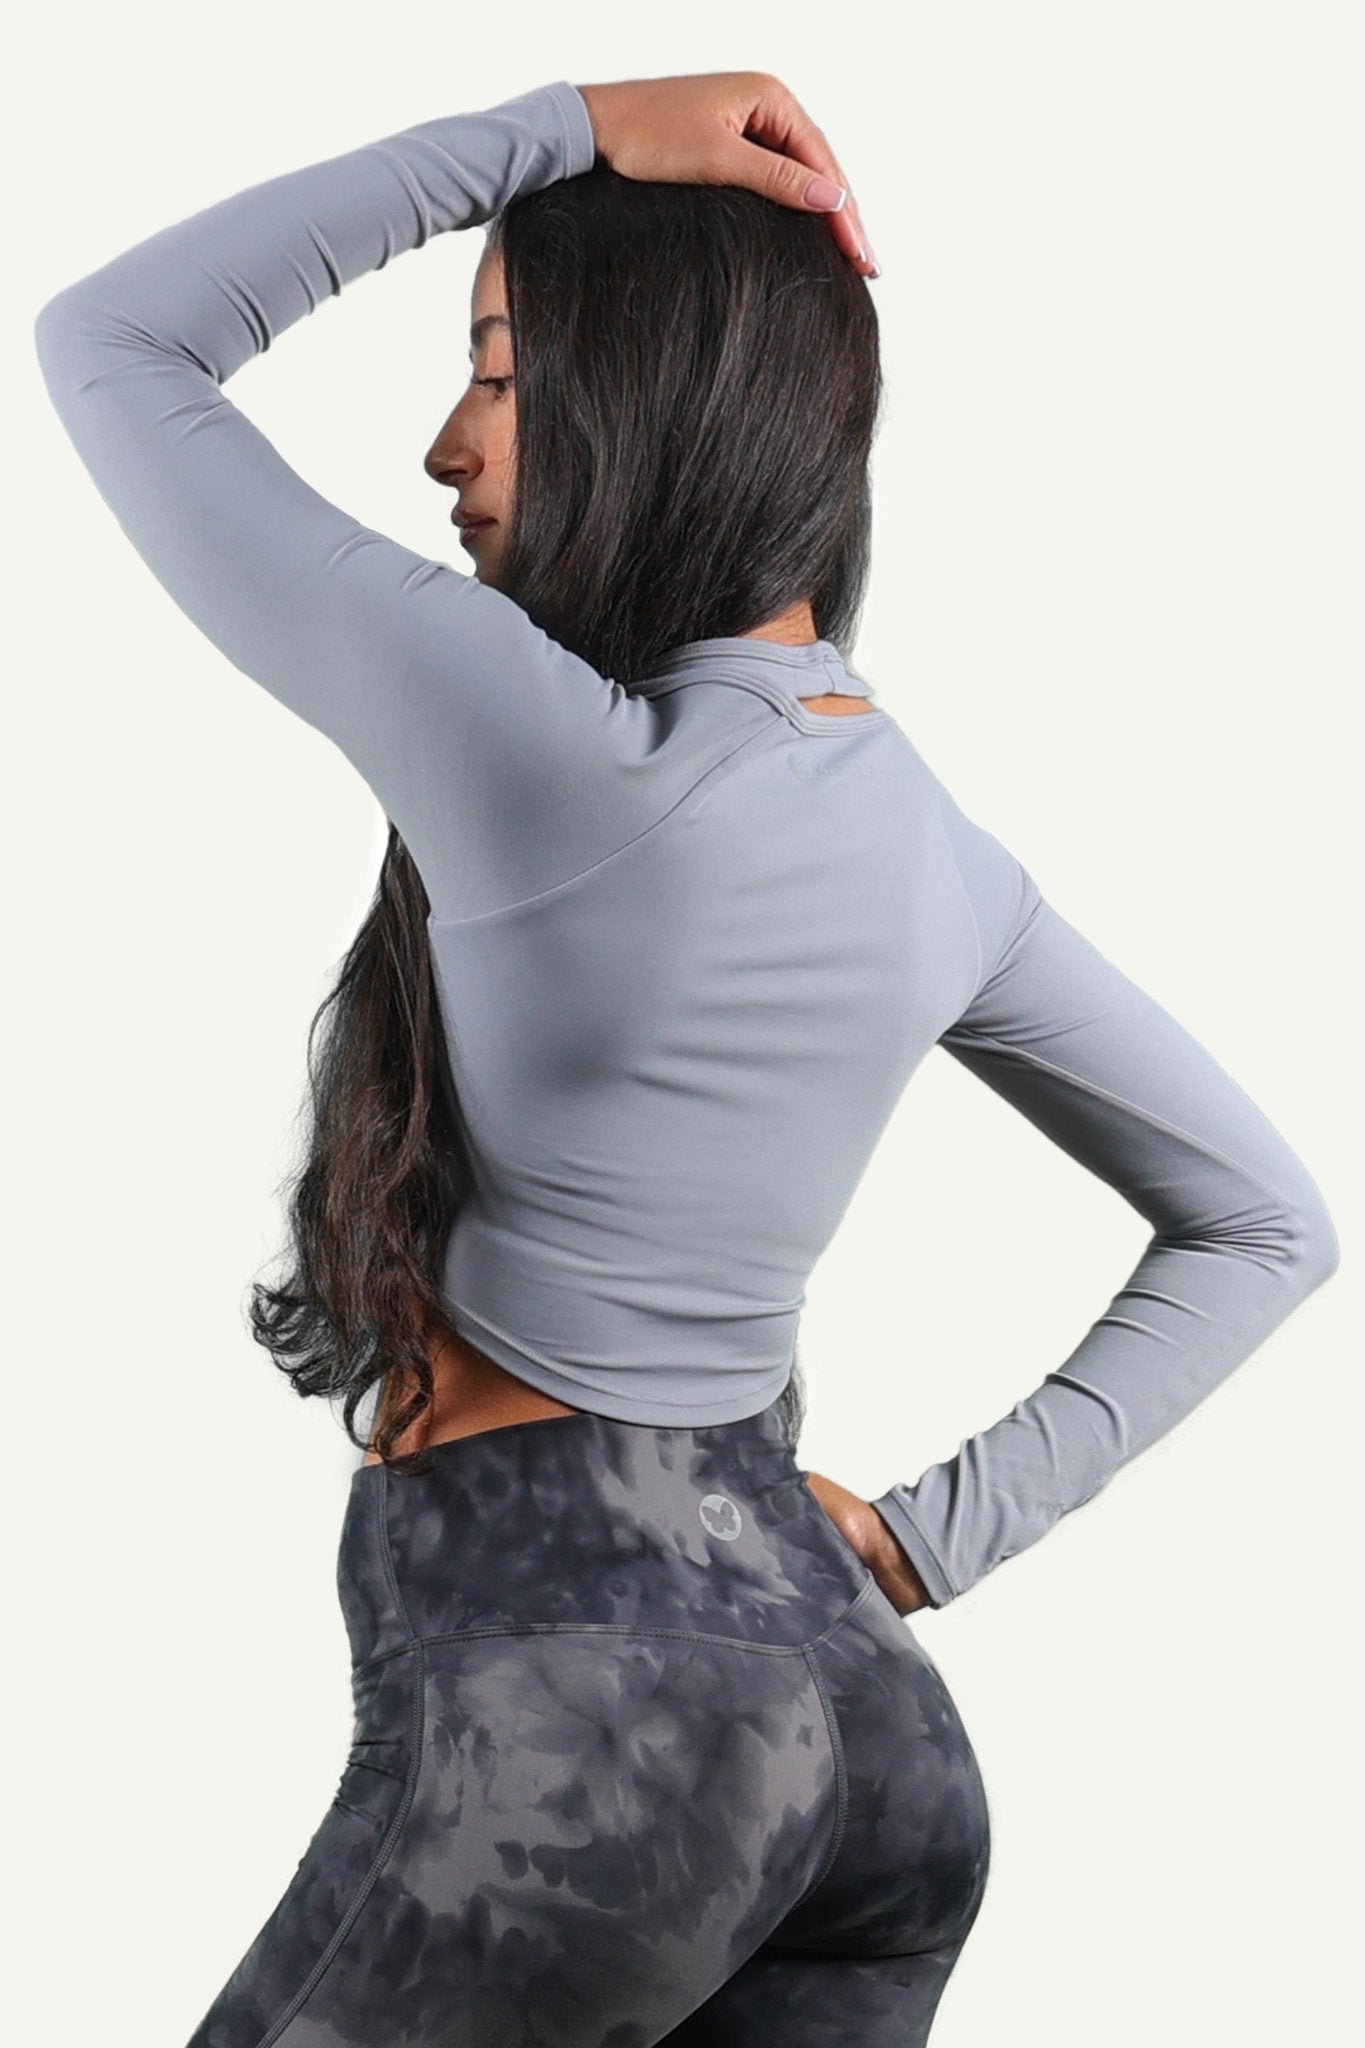 Grey Long Sleeve Gym Crop Top for Women - Kre'level